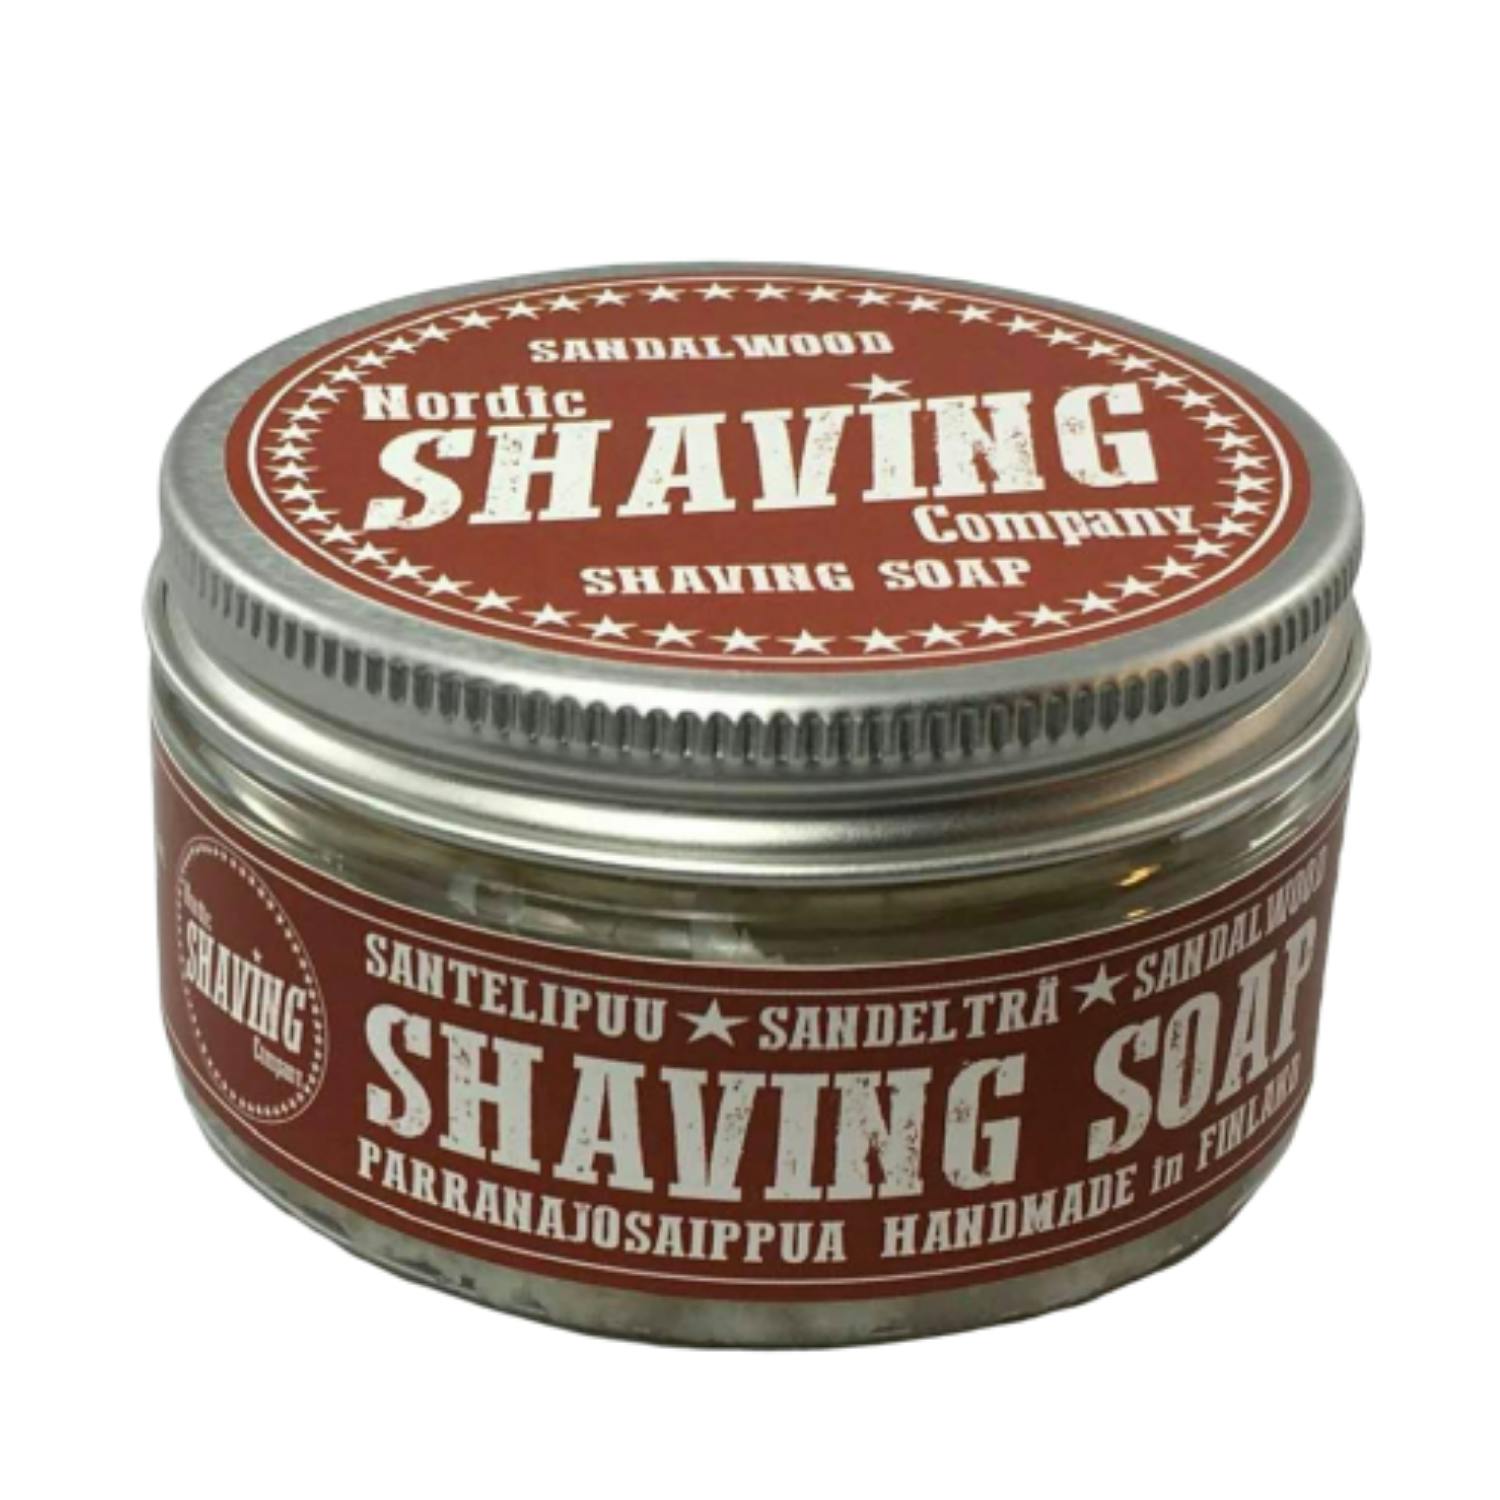 Stylish gift for men in this retro tin of natural shaving soap for wet shaving, with sandalwood